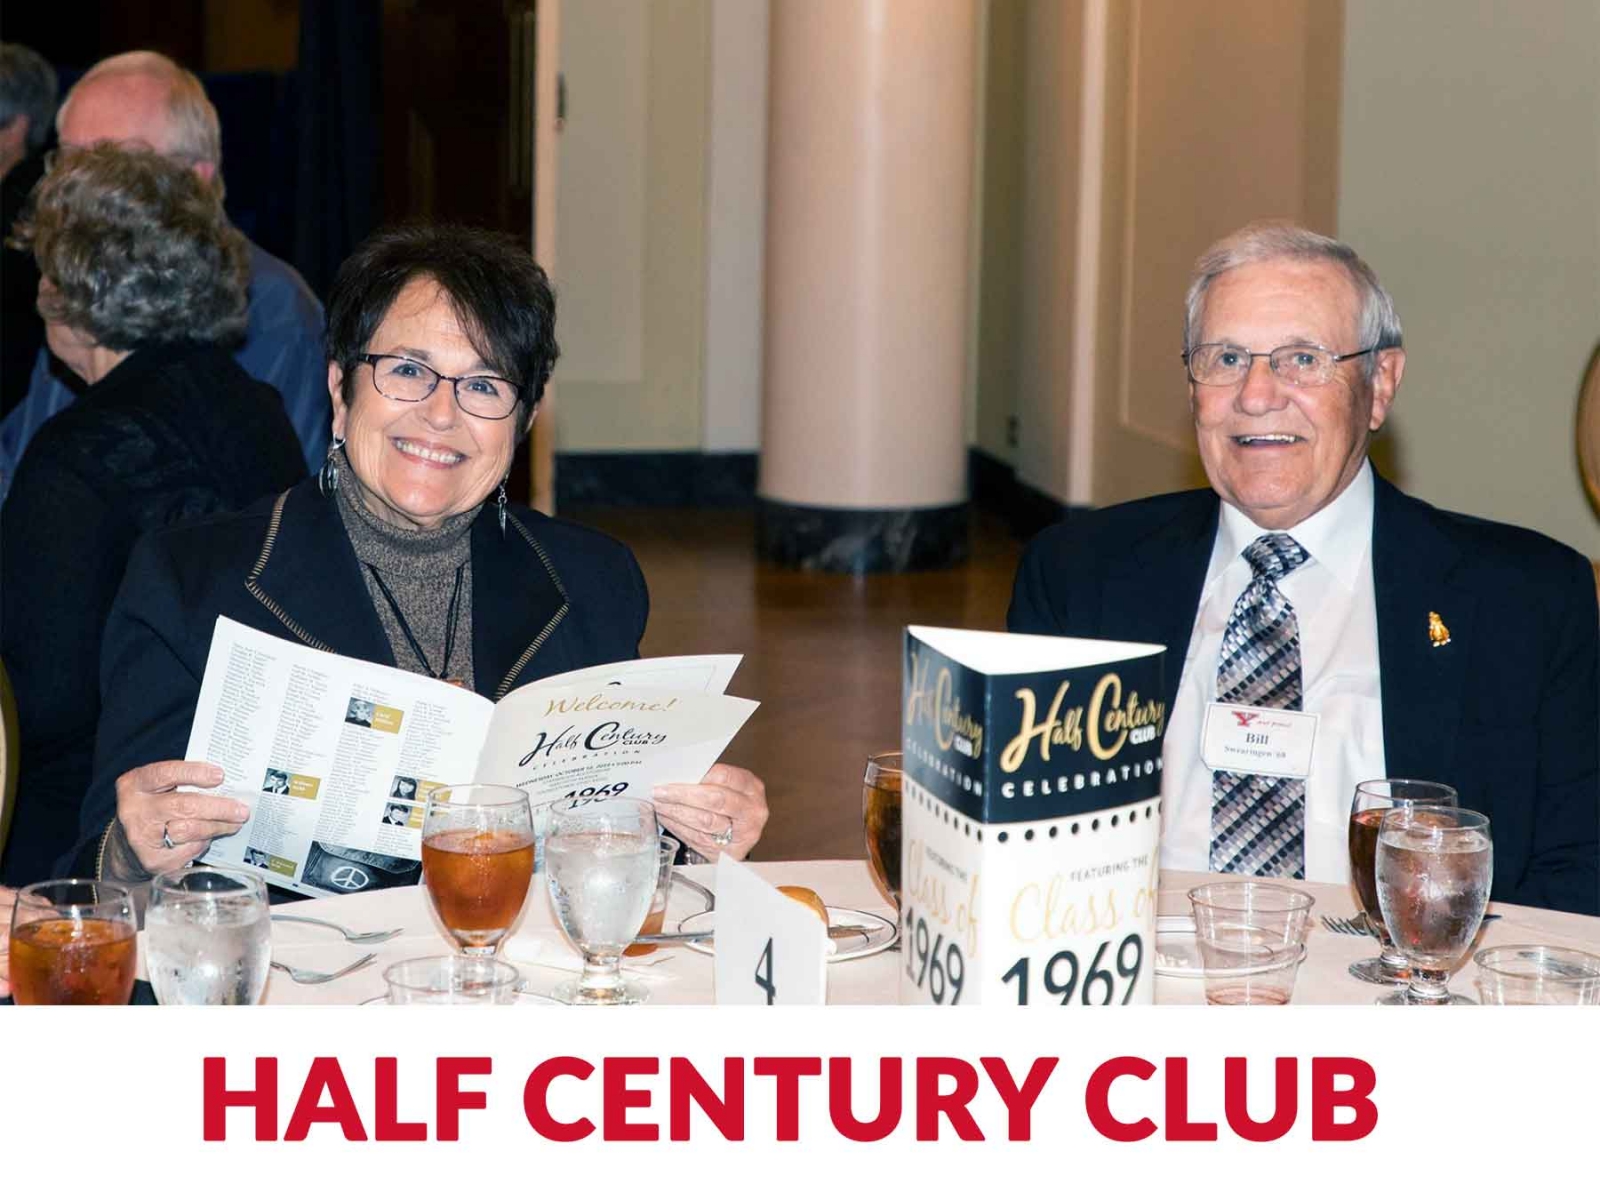 Half century club